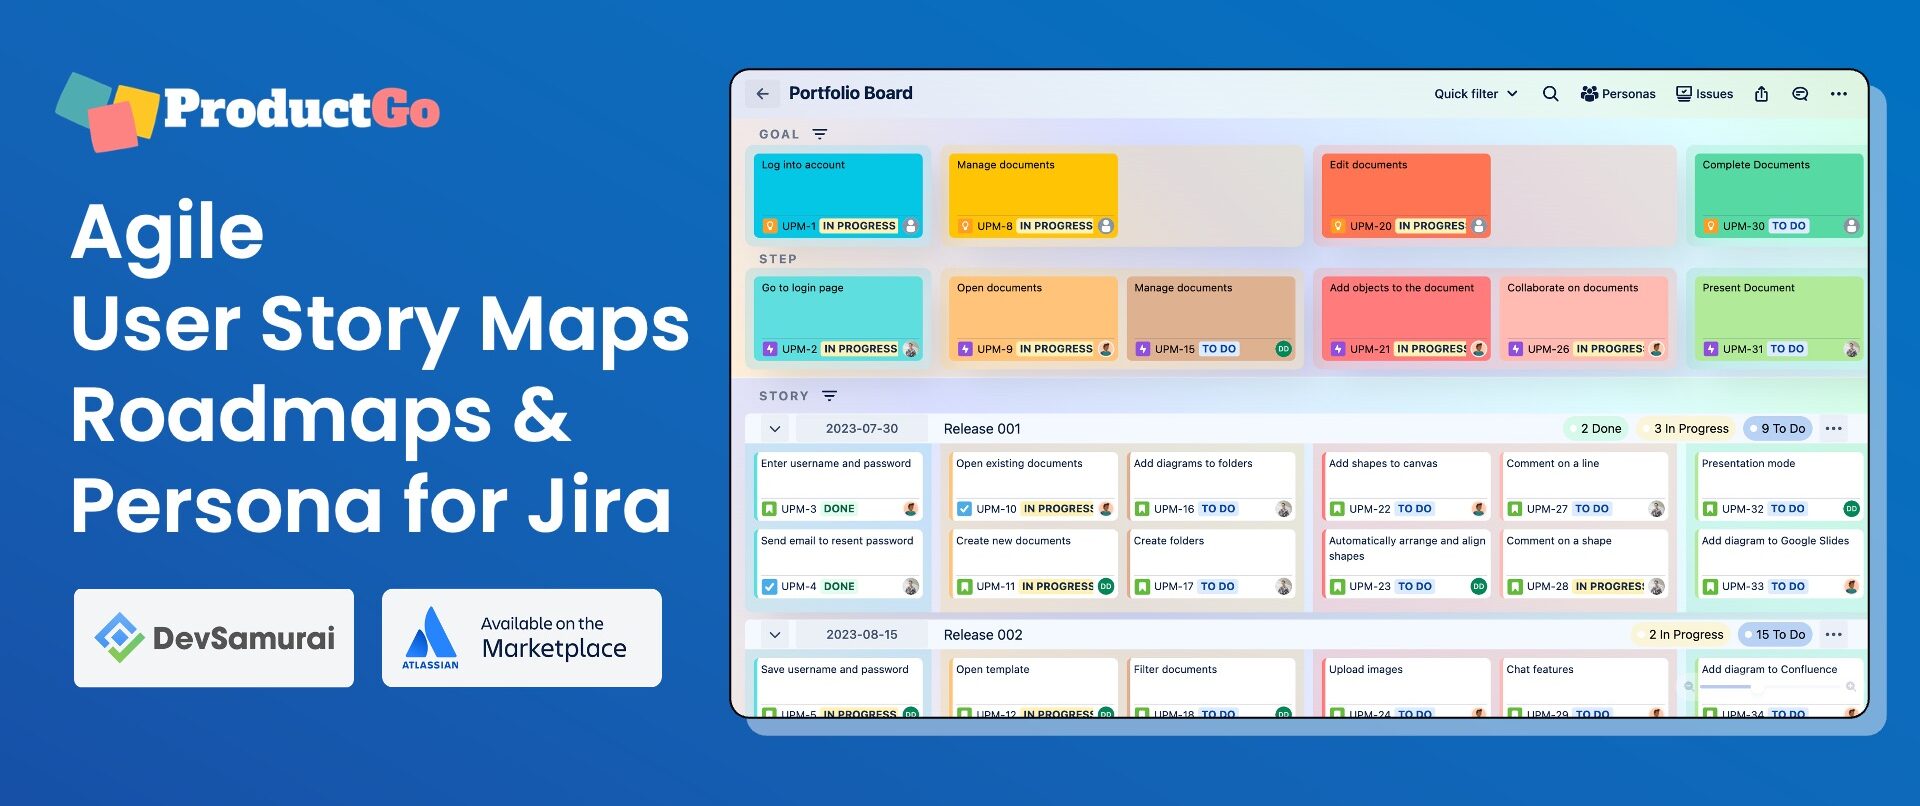 ProductGo - Agile User Story Maps, Roadmaps & Persona for Jira